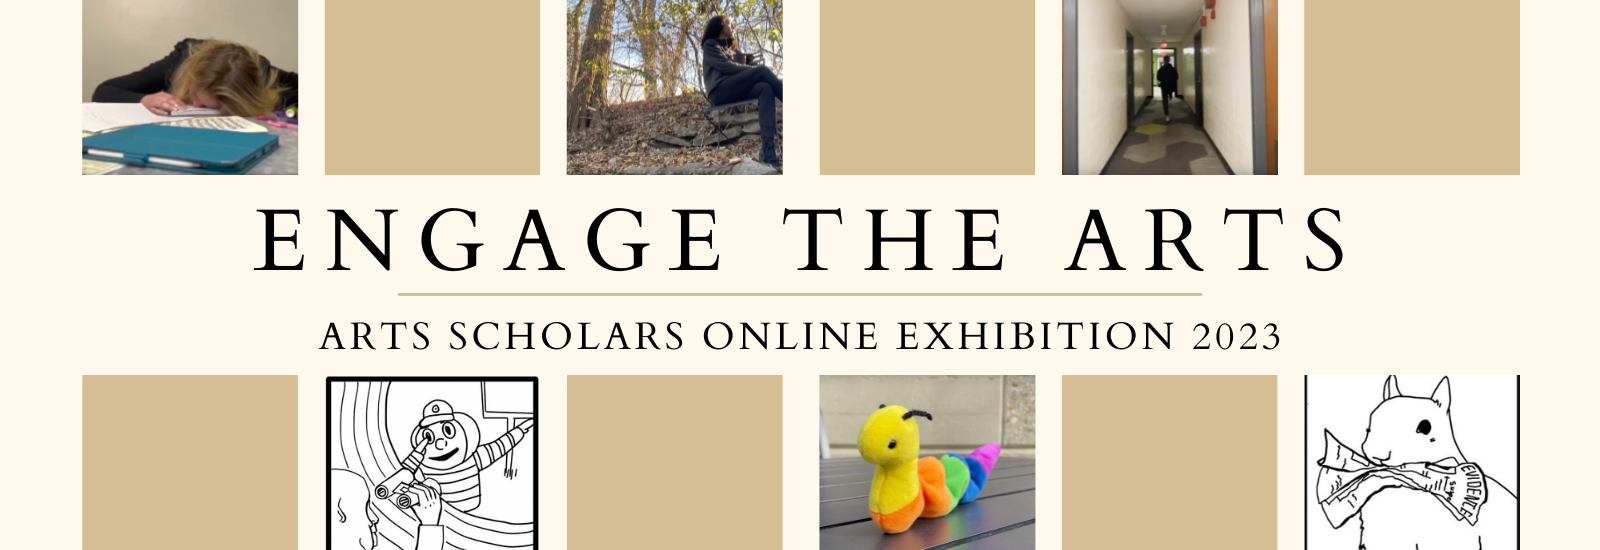 Engage the Arts: Arts Scholars Online Exhibition 2023